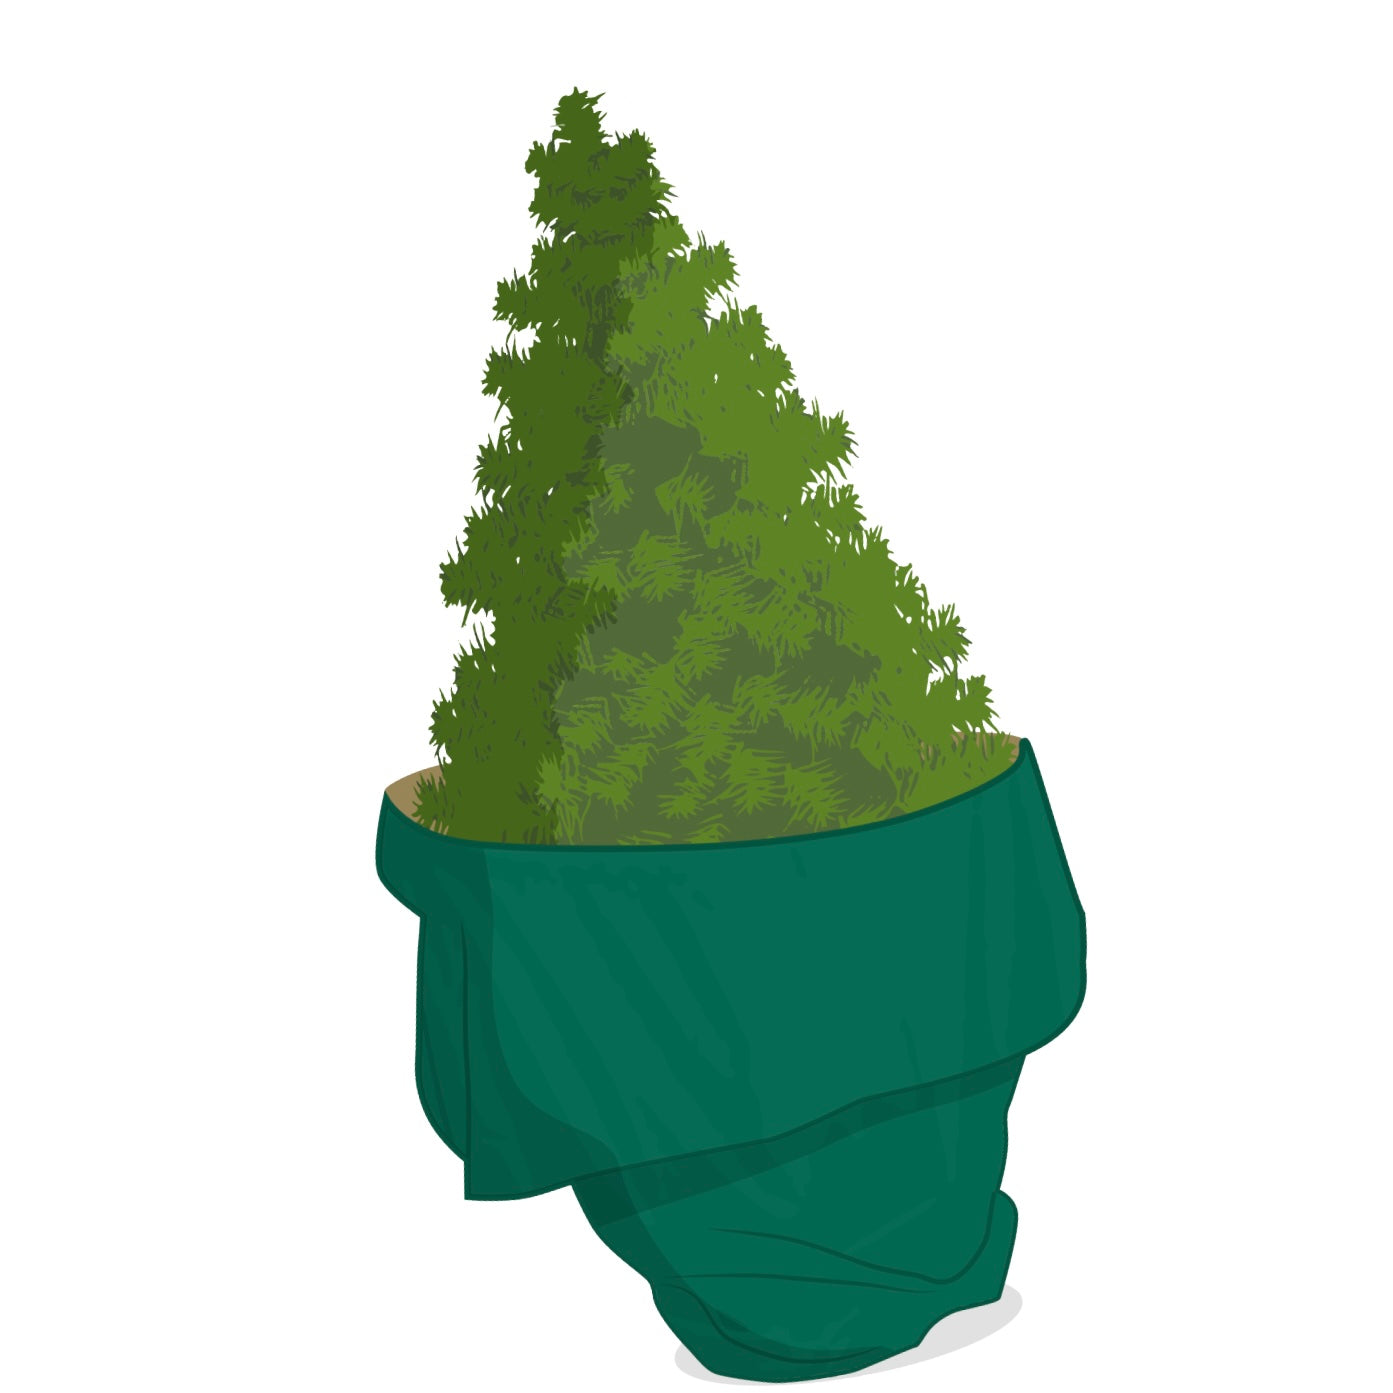 Illustration - Weihnachtsbaum komplett verpackt in unserer grünen Tannenbaum Transporthülle treemova